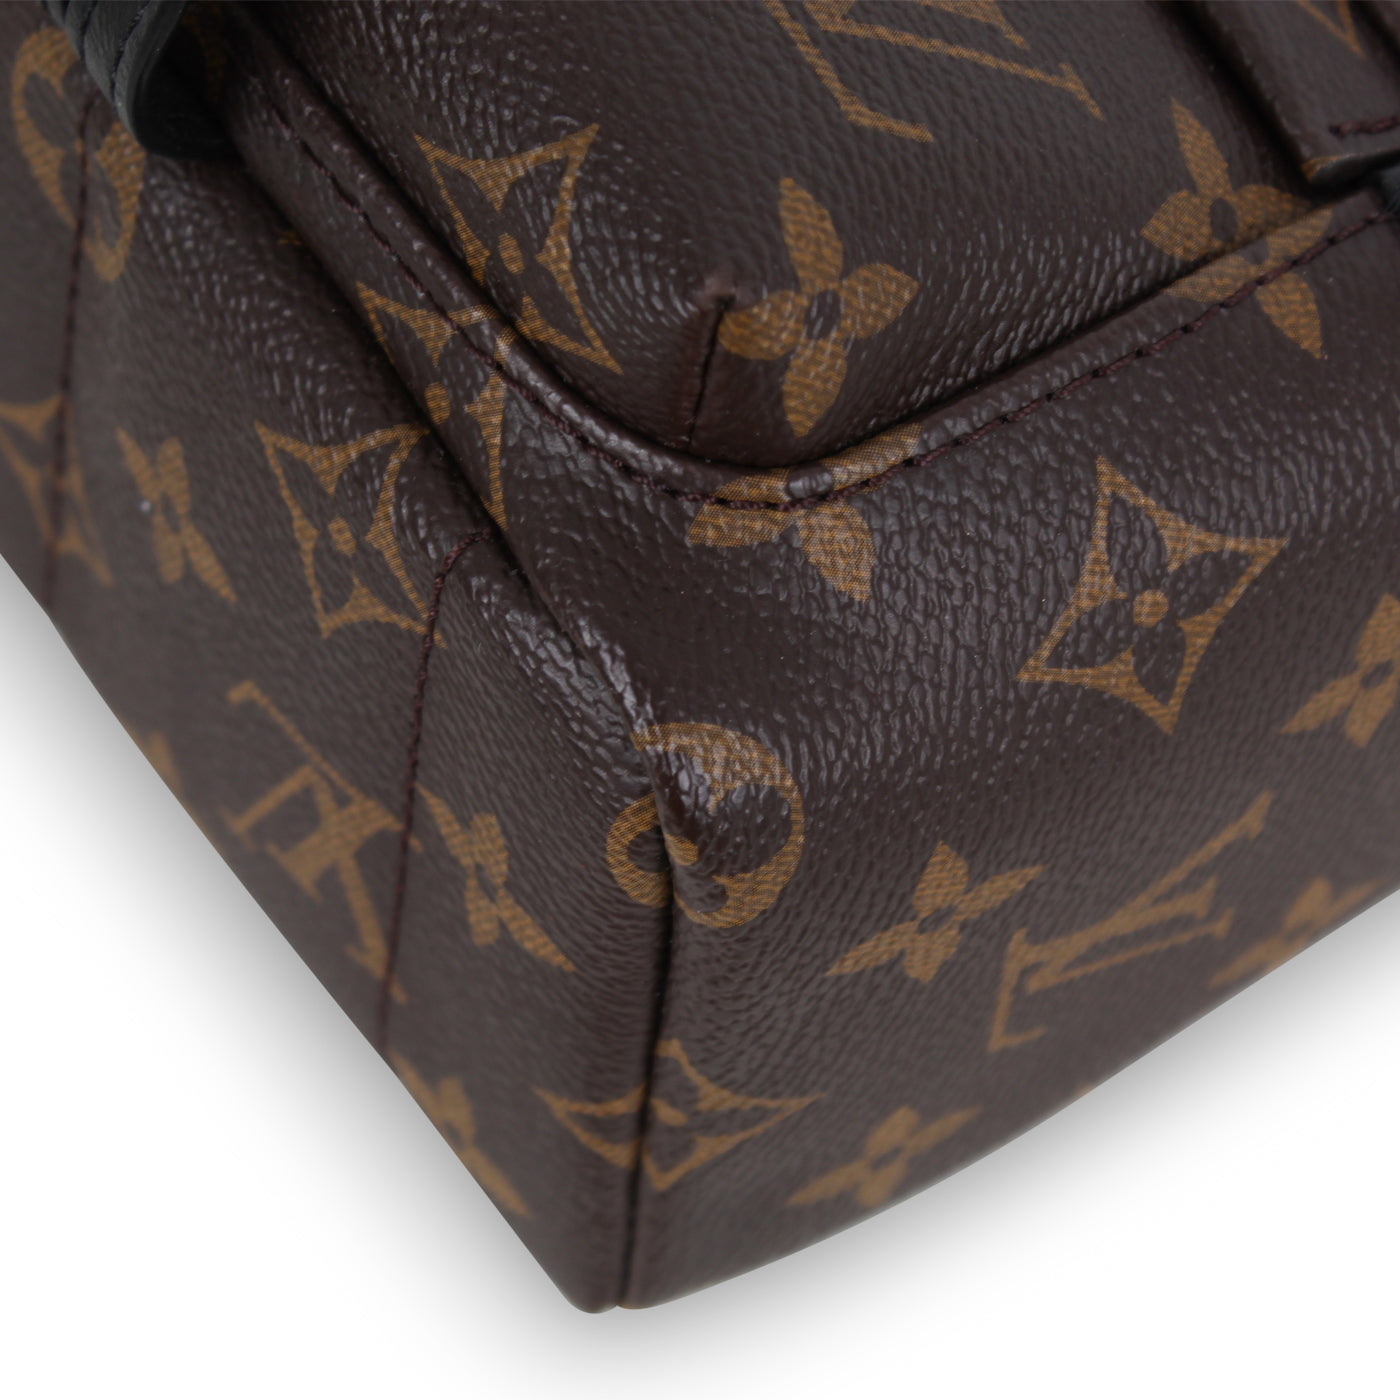 Louis Vuitton Monogram Palm Springs Brown Mini Backpack - Chronostore